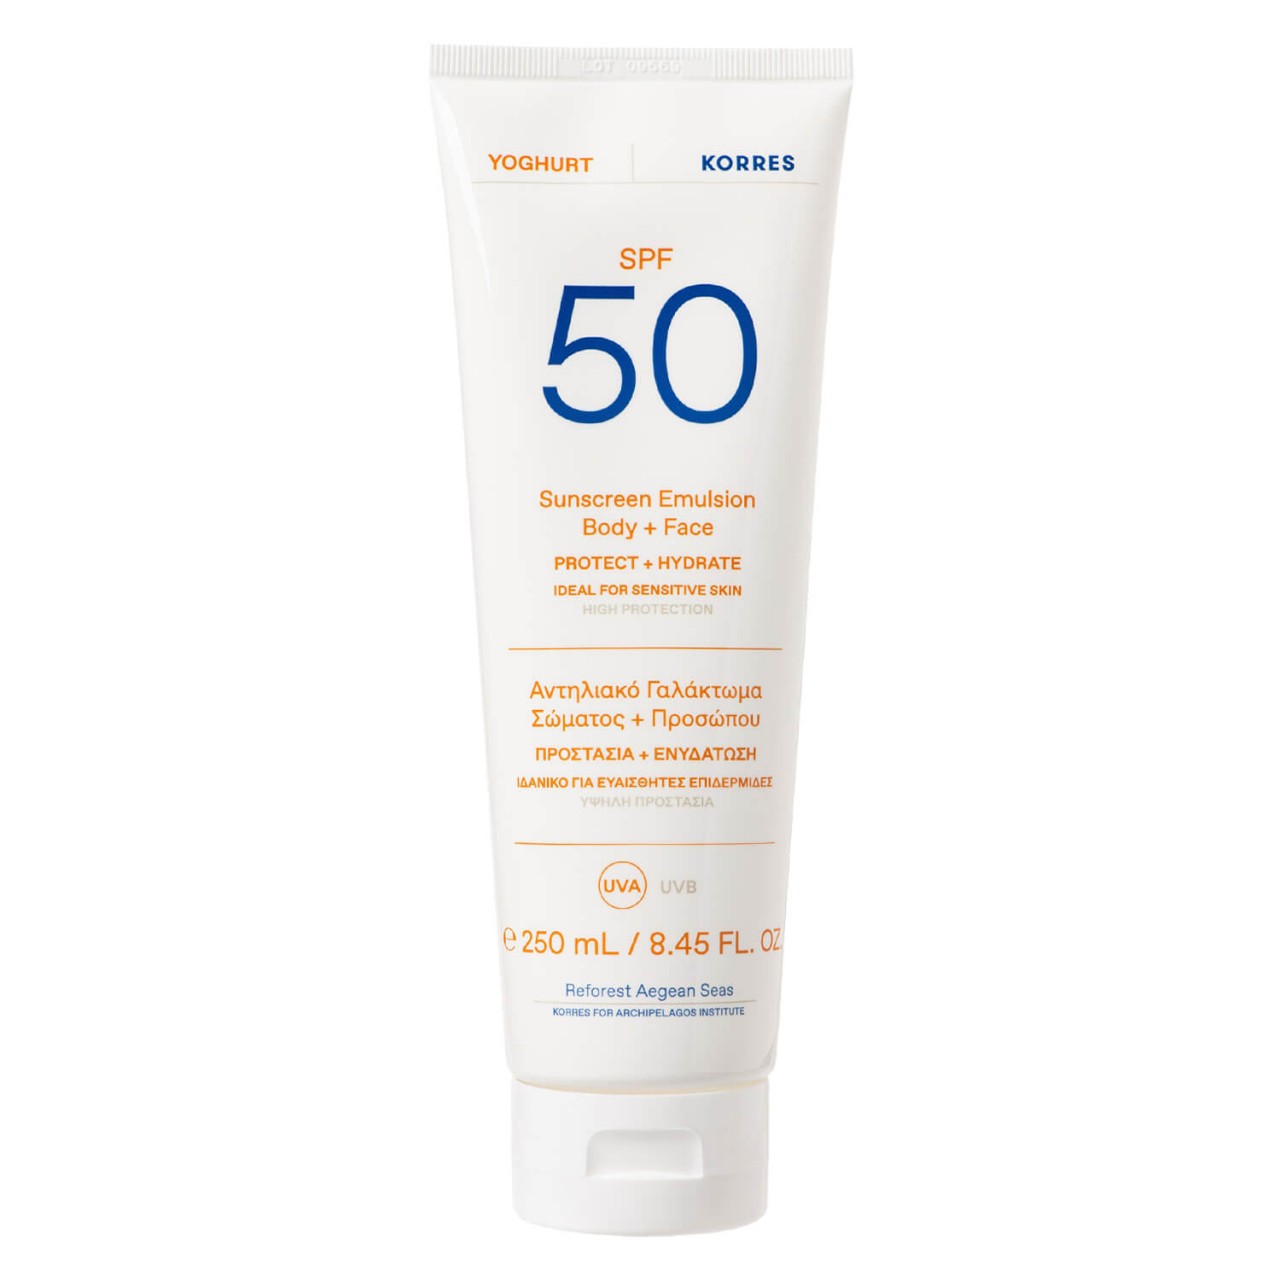 Korres Care - Yoghurt Sunscreen Emulsion Body + Face SPF50 von Korres